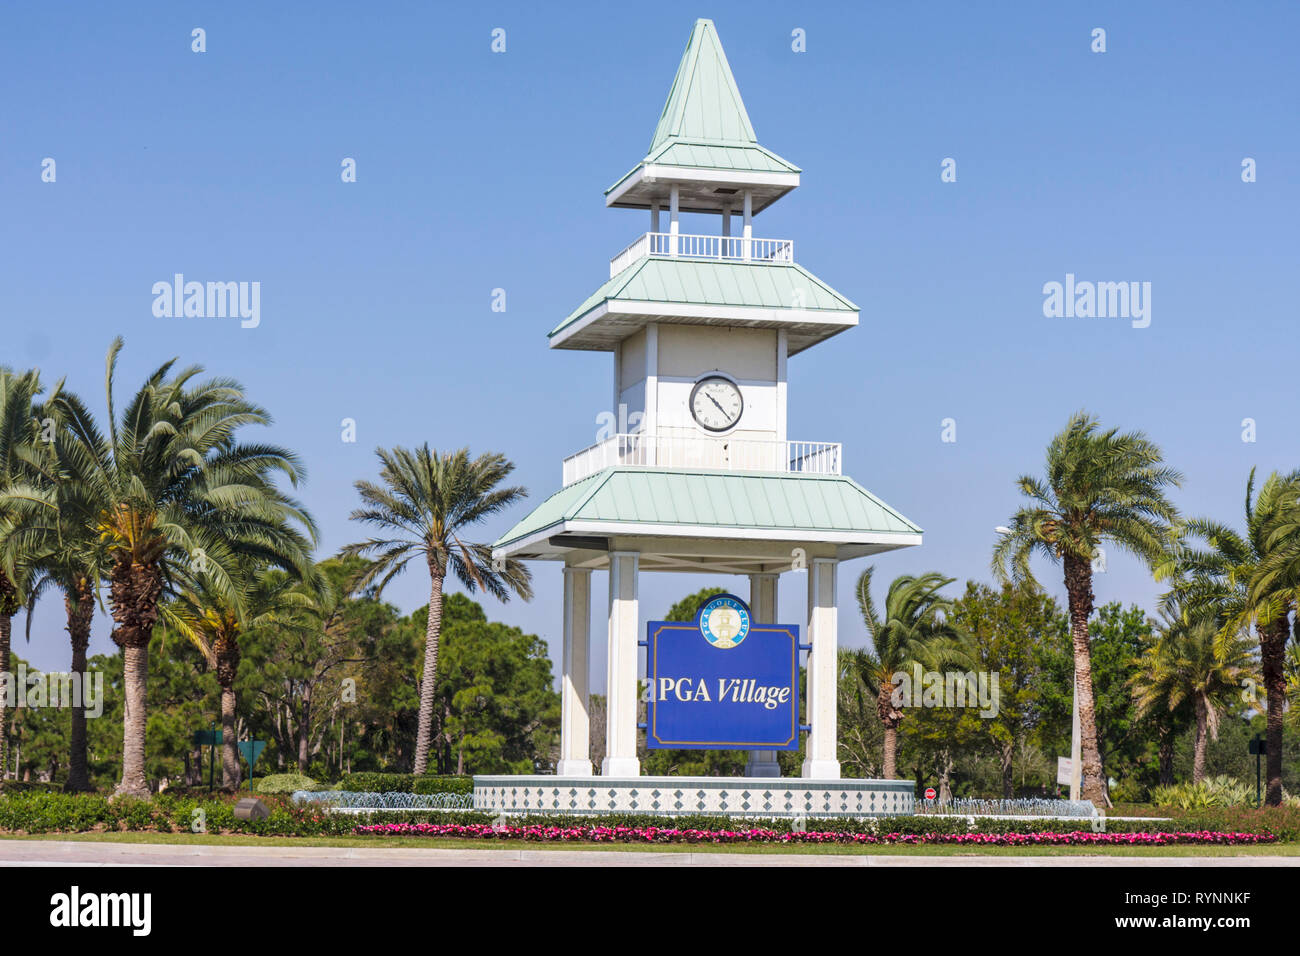 Port St. Saint Lucie Florida,PGA Villageal Golfers' Association,PGA Golf Club,golf course community,entrance marker,clock tower Stock Photo